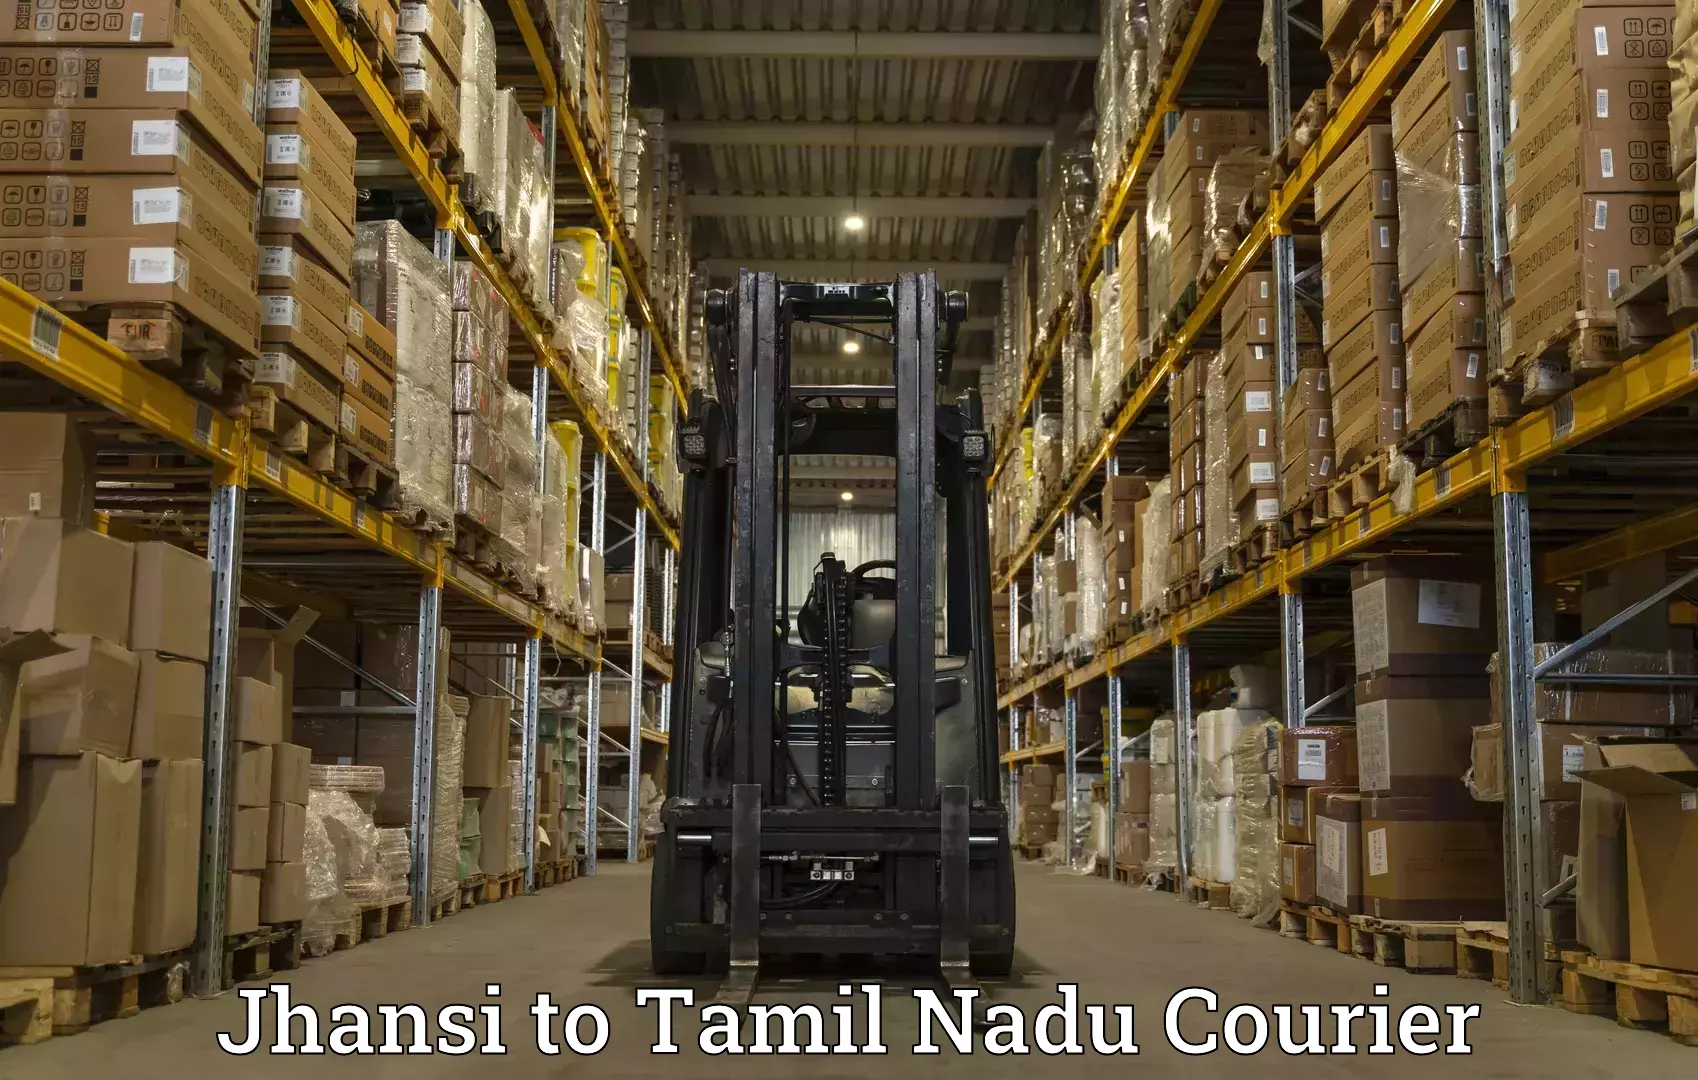 Express mail solutions Jhansi to Tamil Nadu